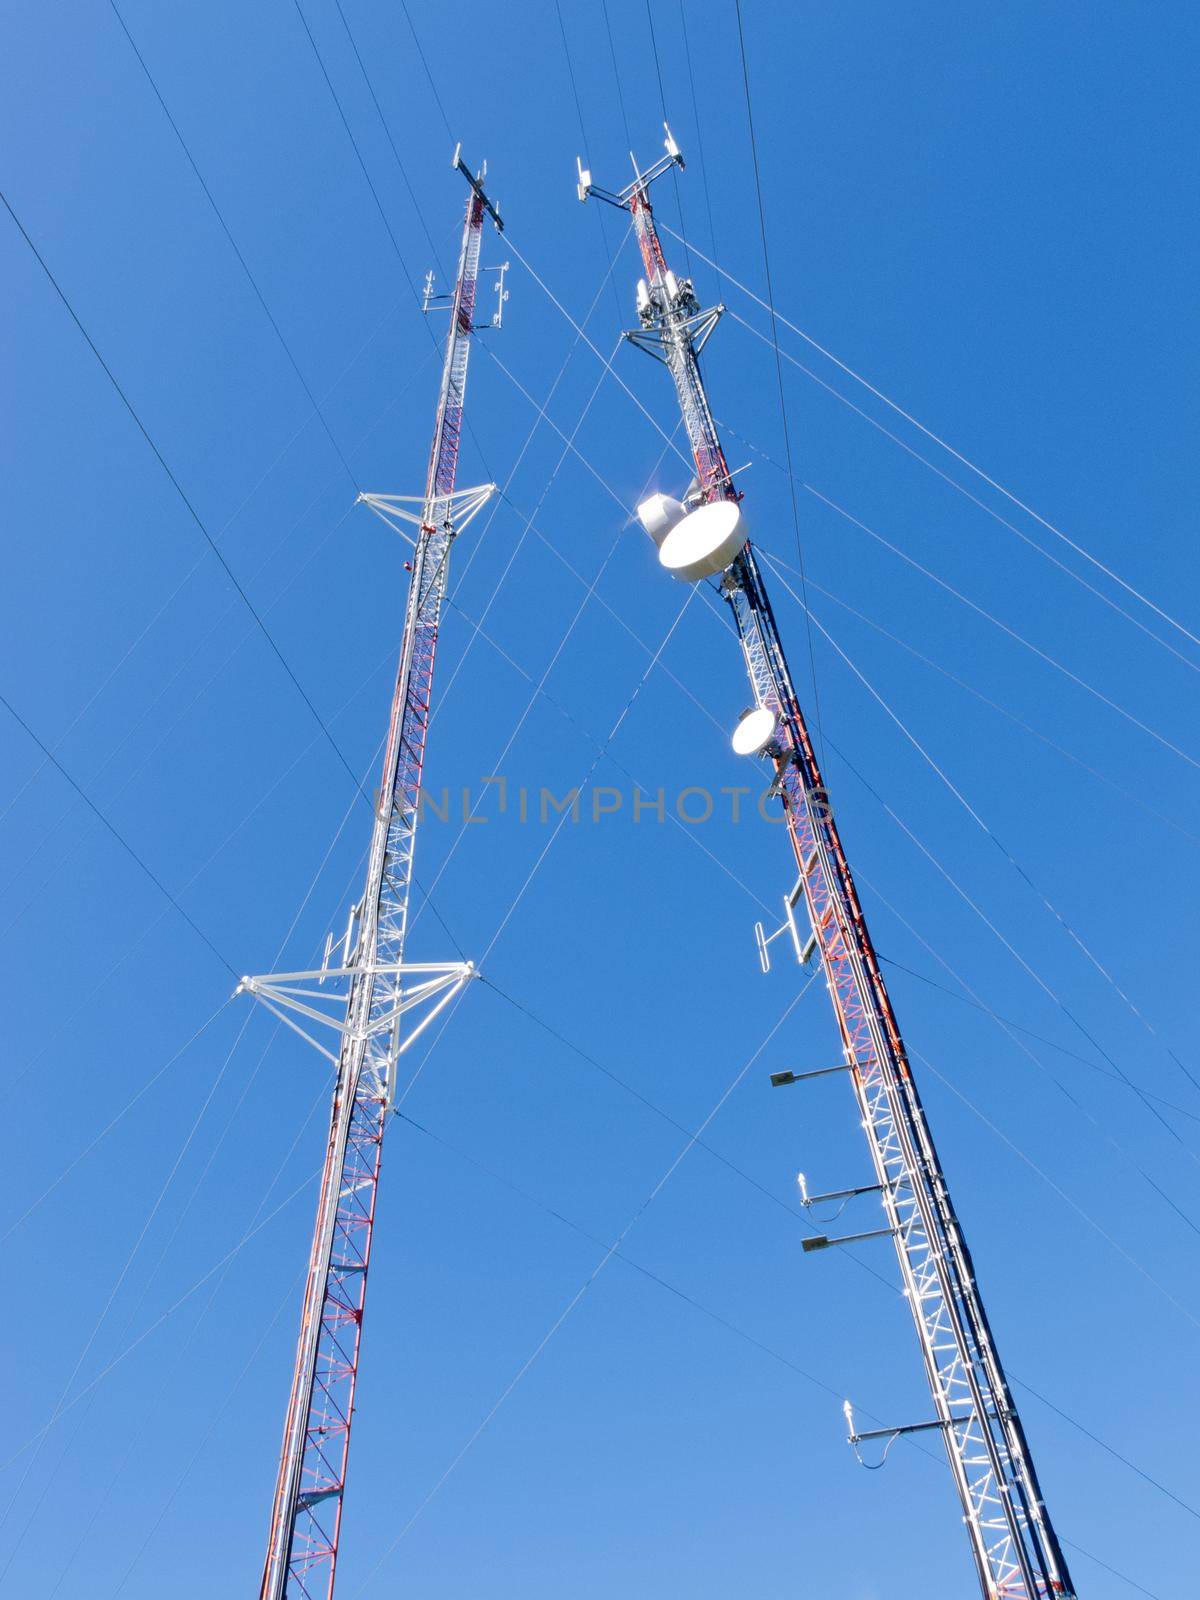 Two lattice telecommunication antenna towers by PiLens